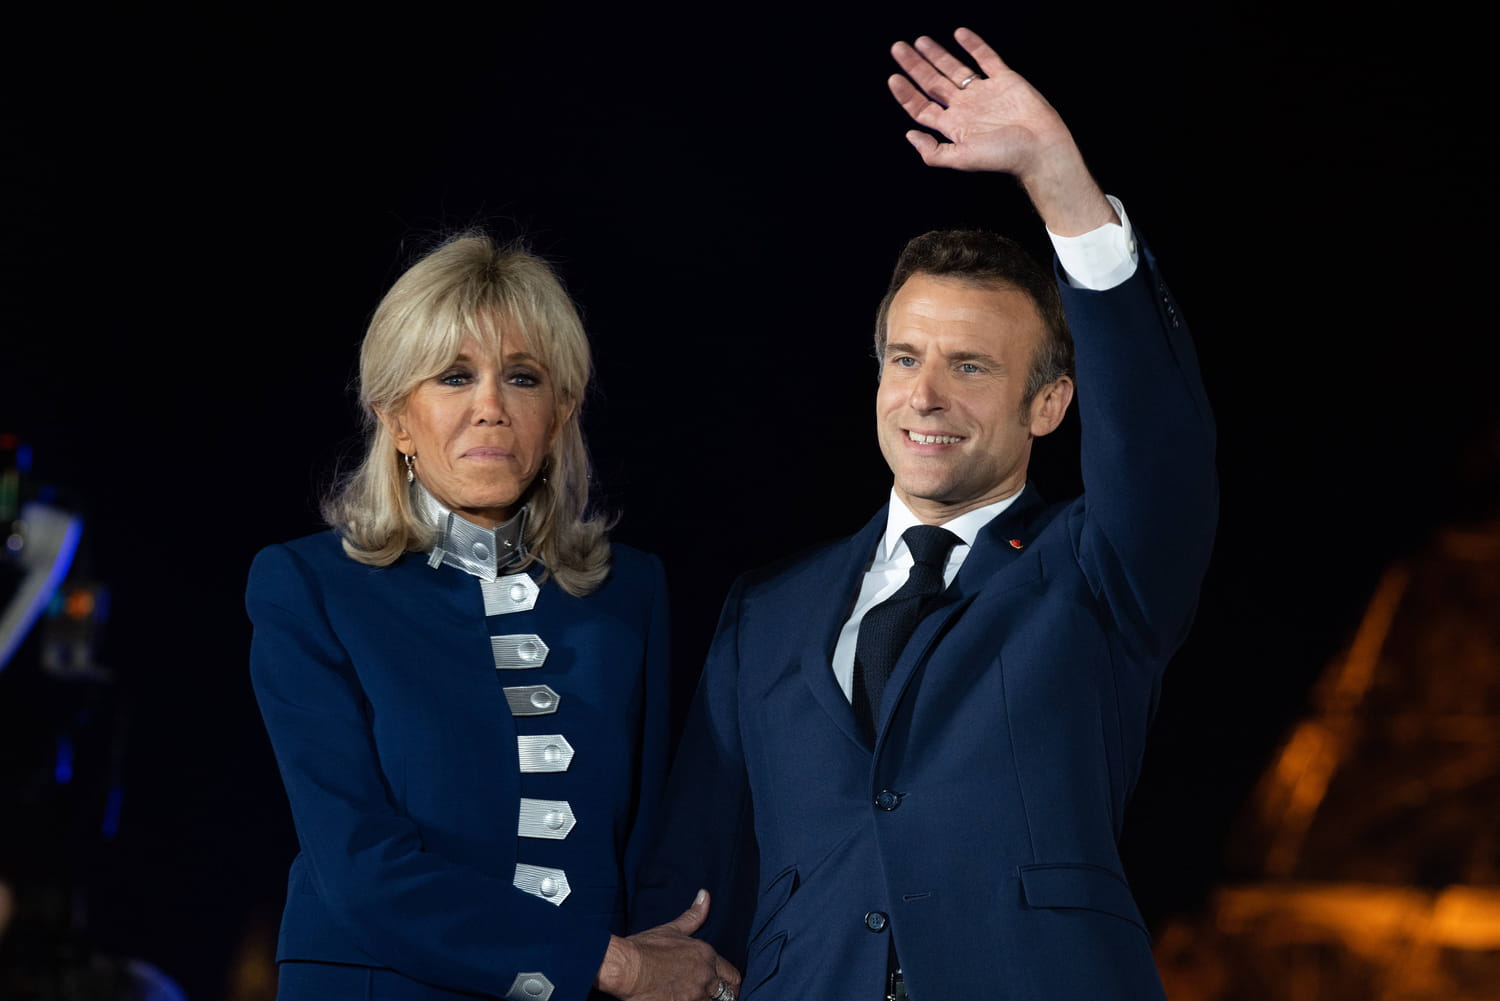  Brigitte et Emmanuel Macron @ JEANNE ACCORSINI/SIPA